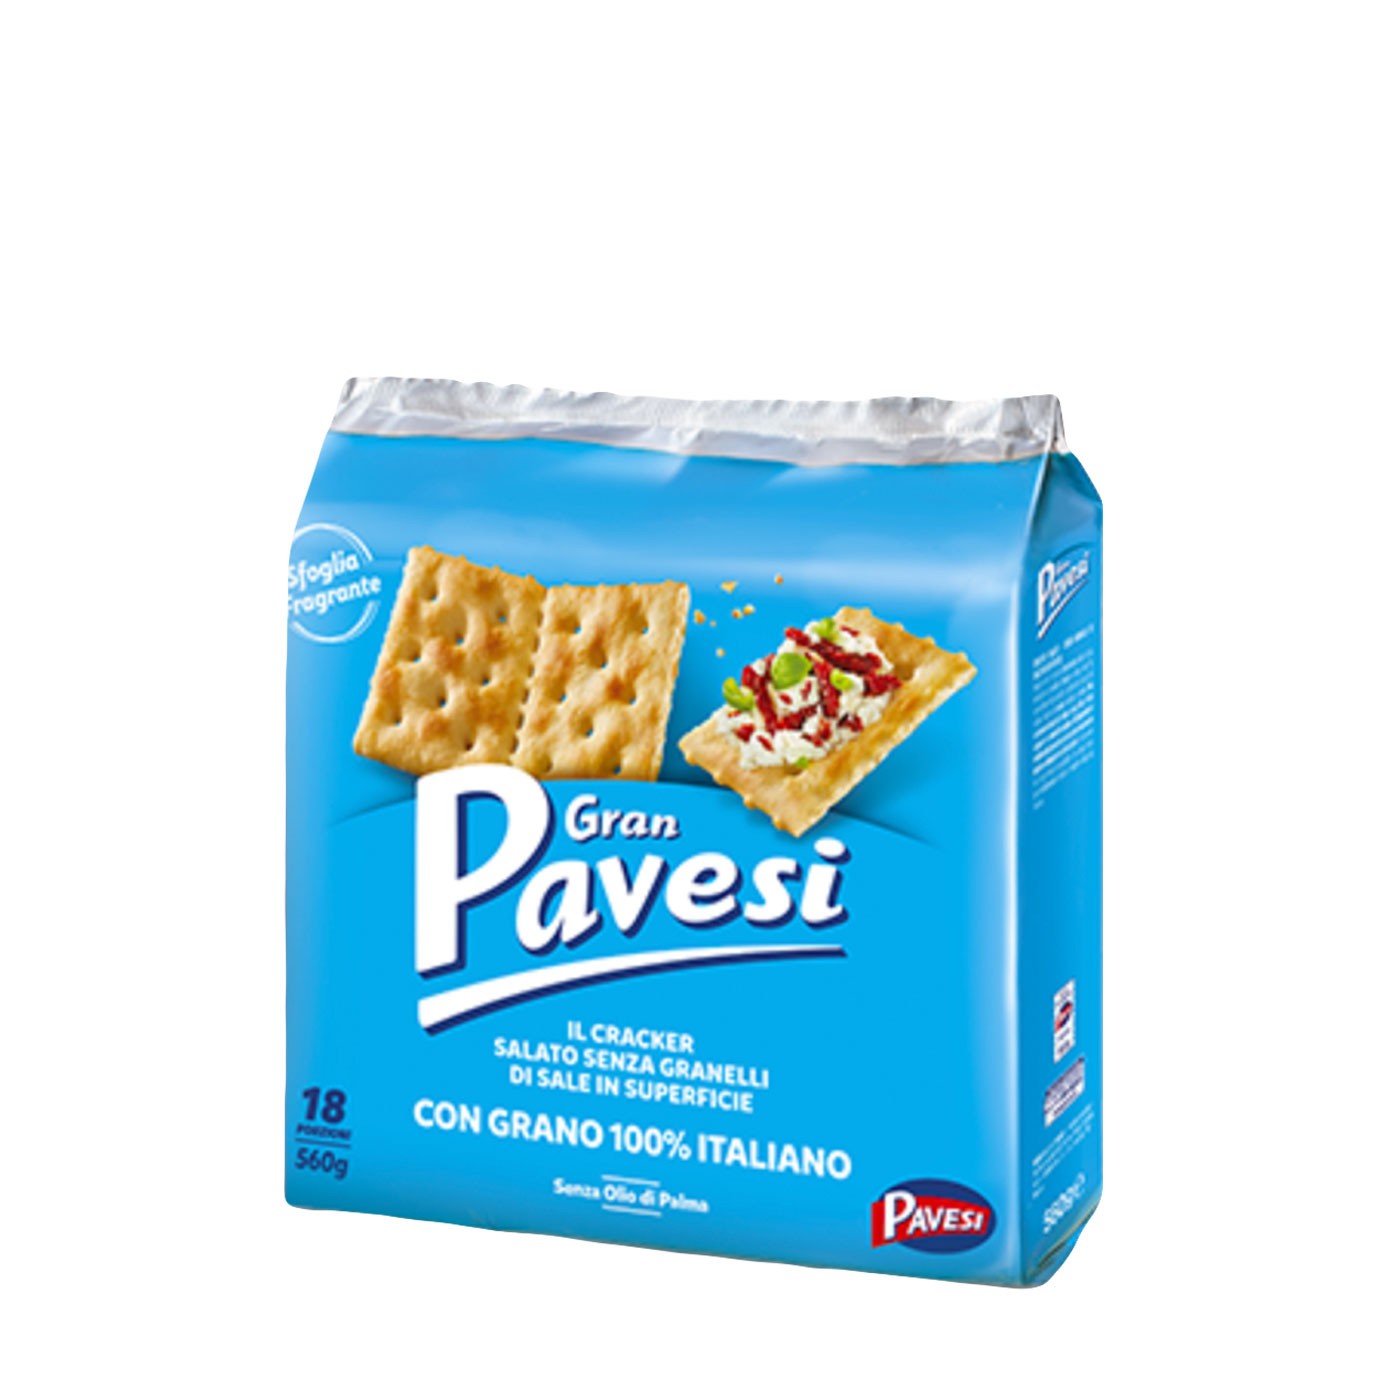 Gran Pavesi Reduced Salt Crackers 8.8 oz